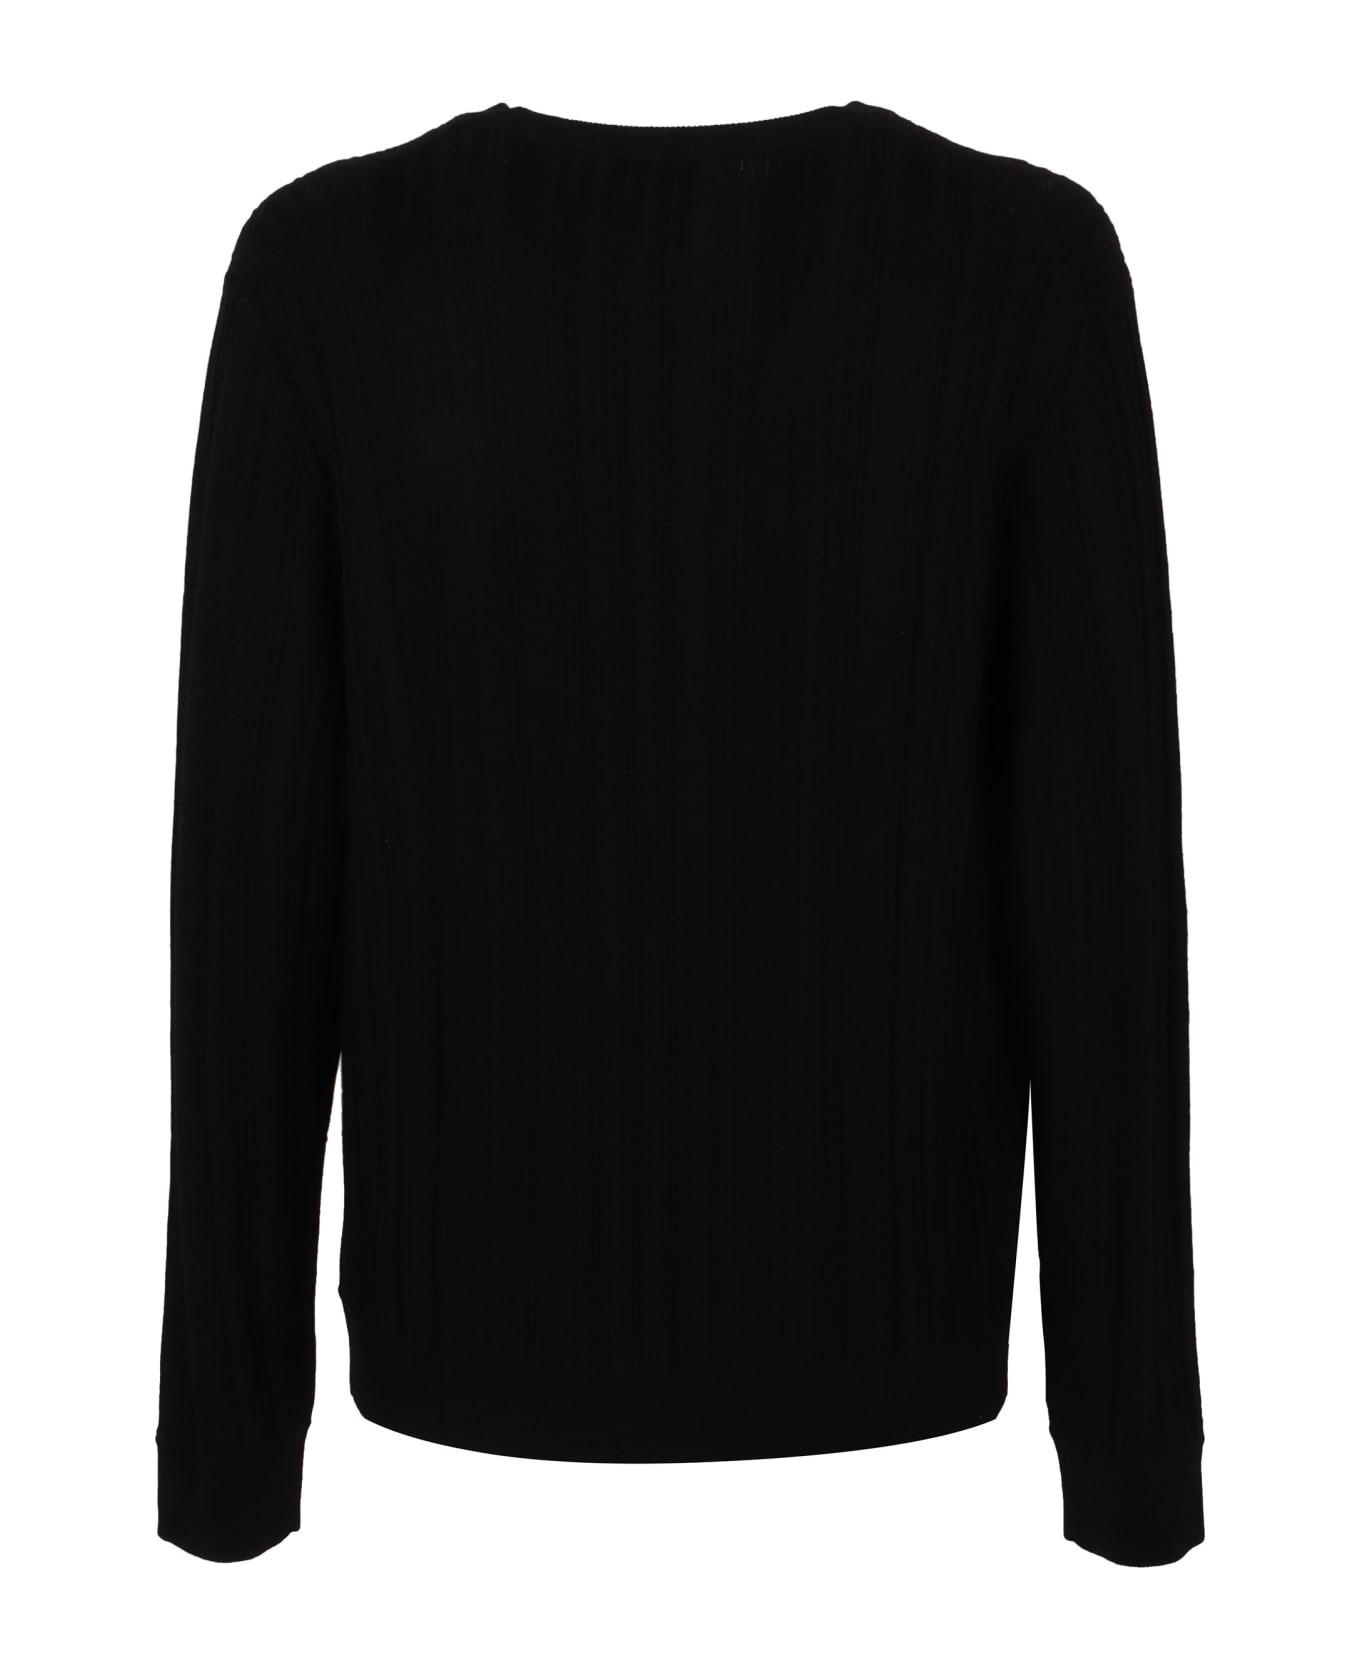 Paul Smith Merino Wool Sweater - black ニットウェア